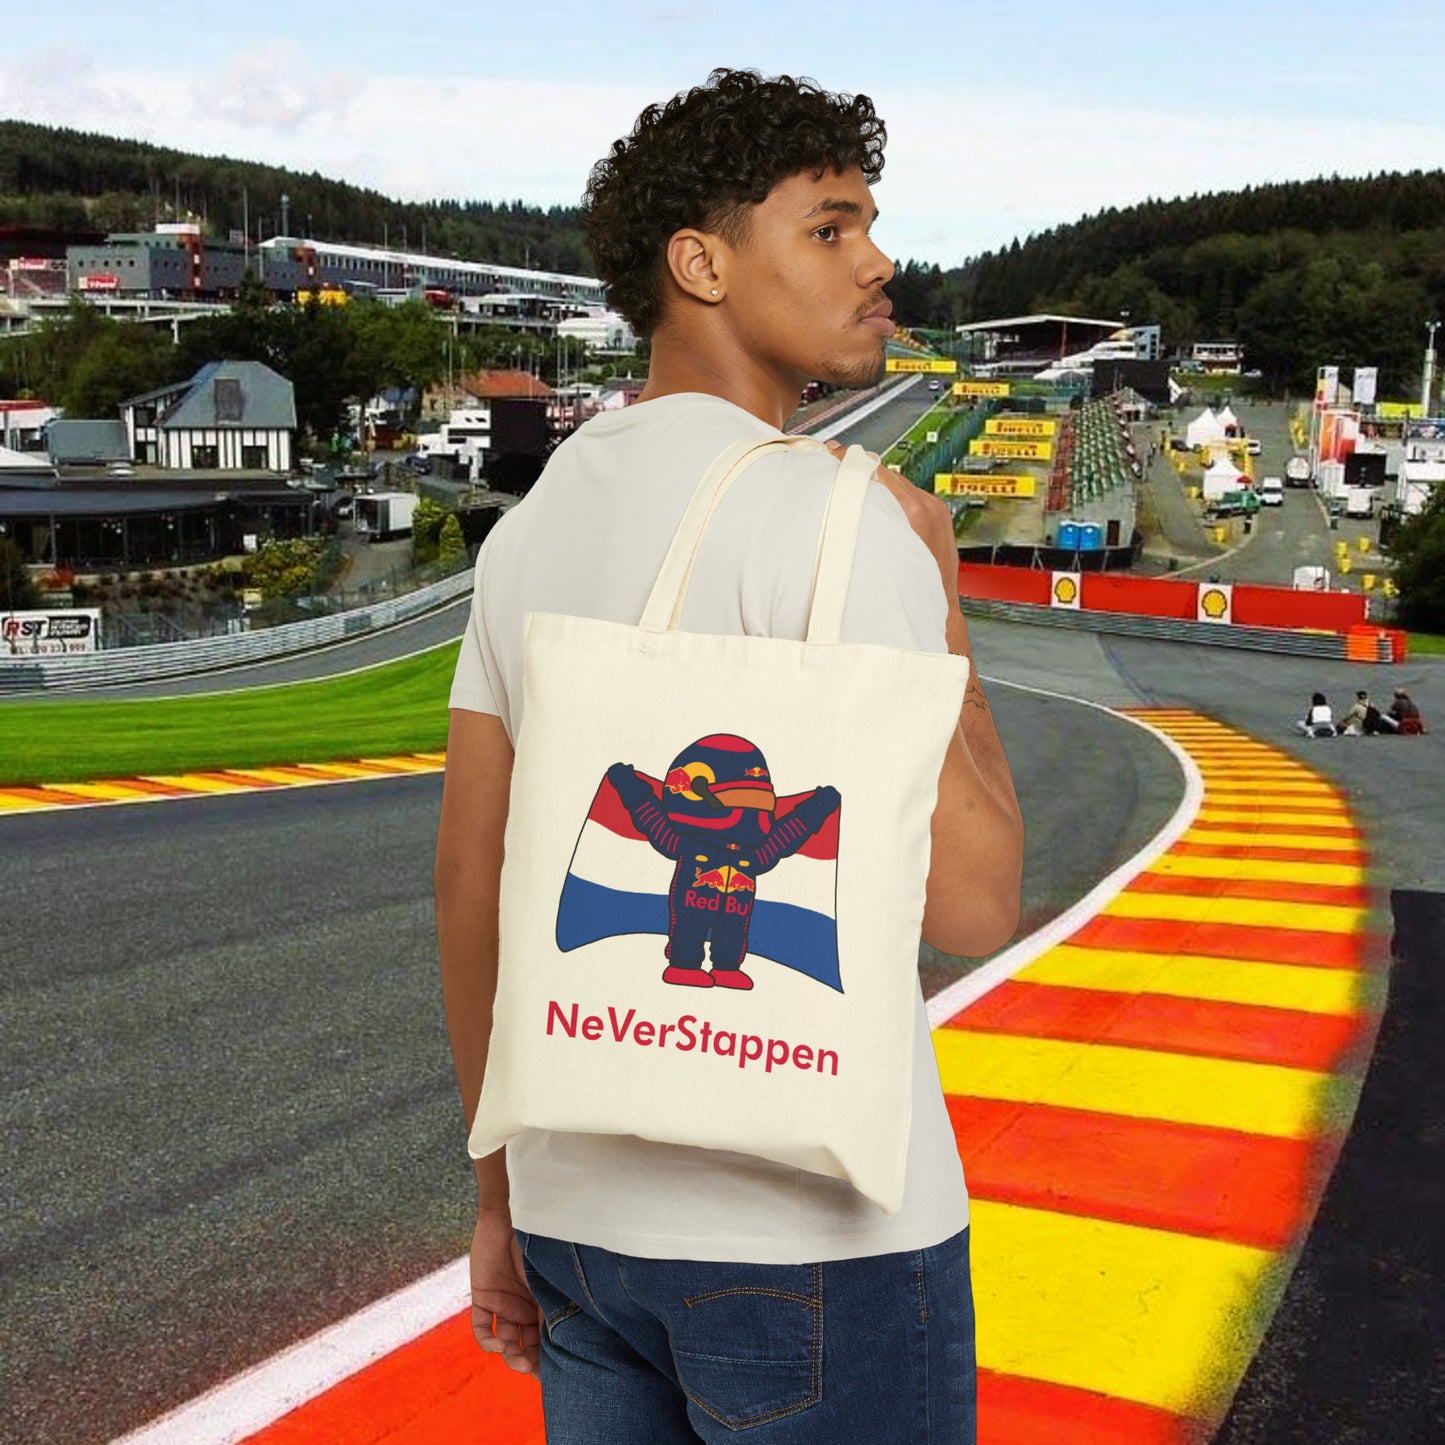 NeVerStappen Red Bull Formula 1 F1 Max Vertsappen Cotton Canvas Tote Bag Next Cult Brand